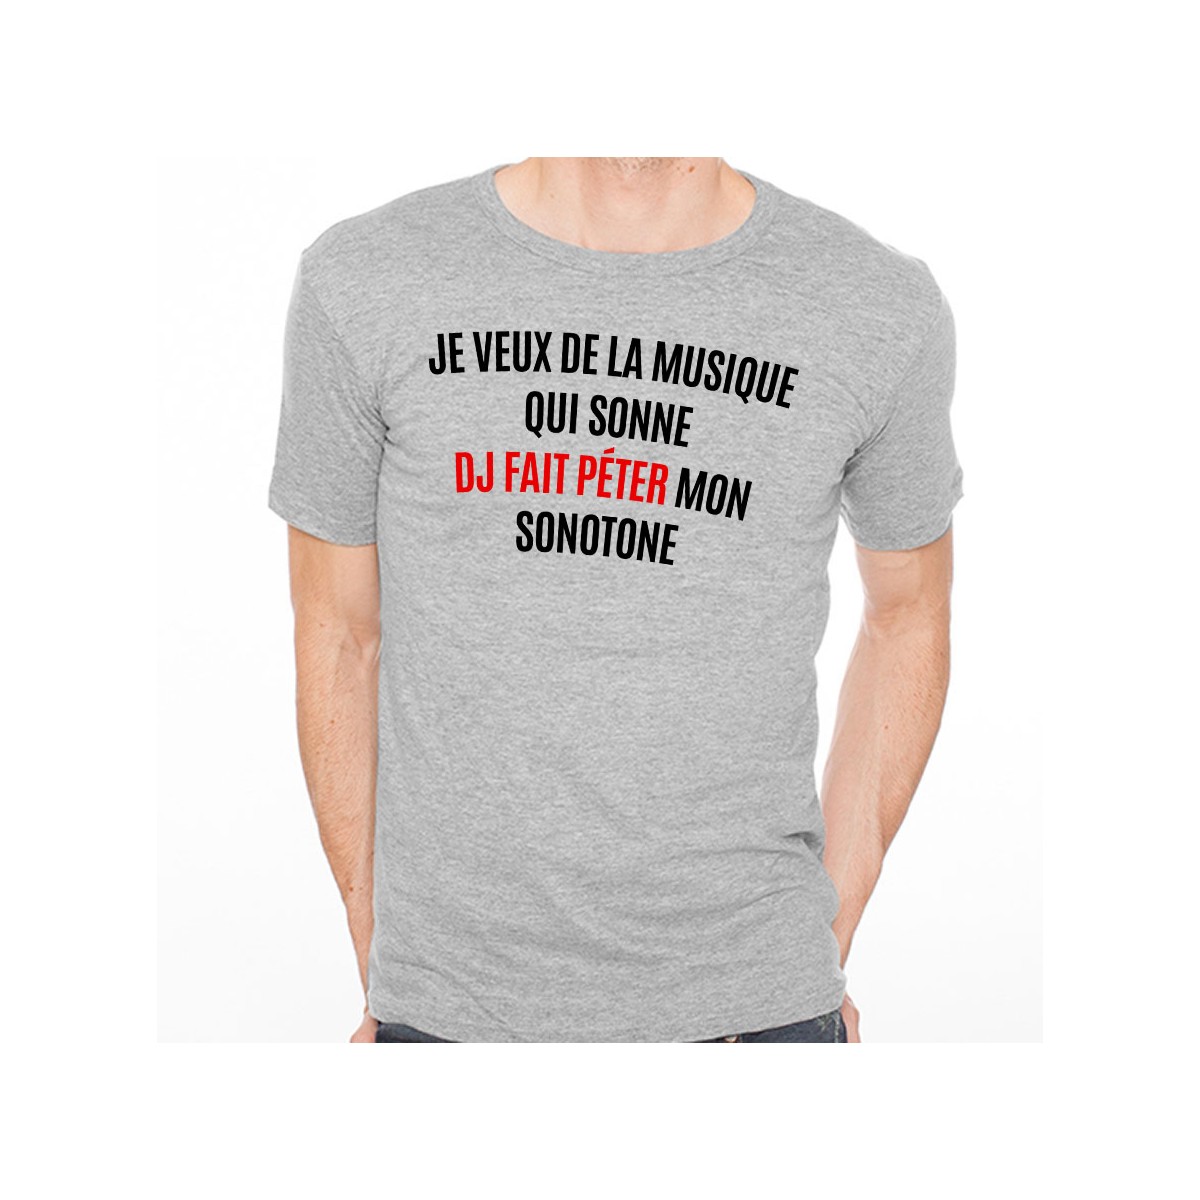 T-shirt Sonotone